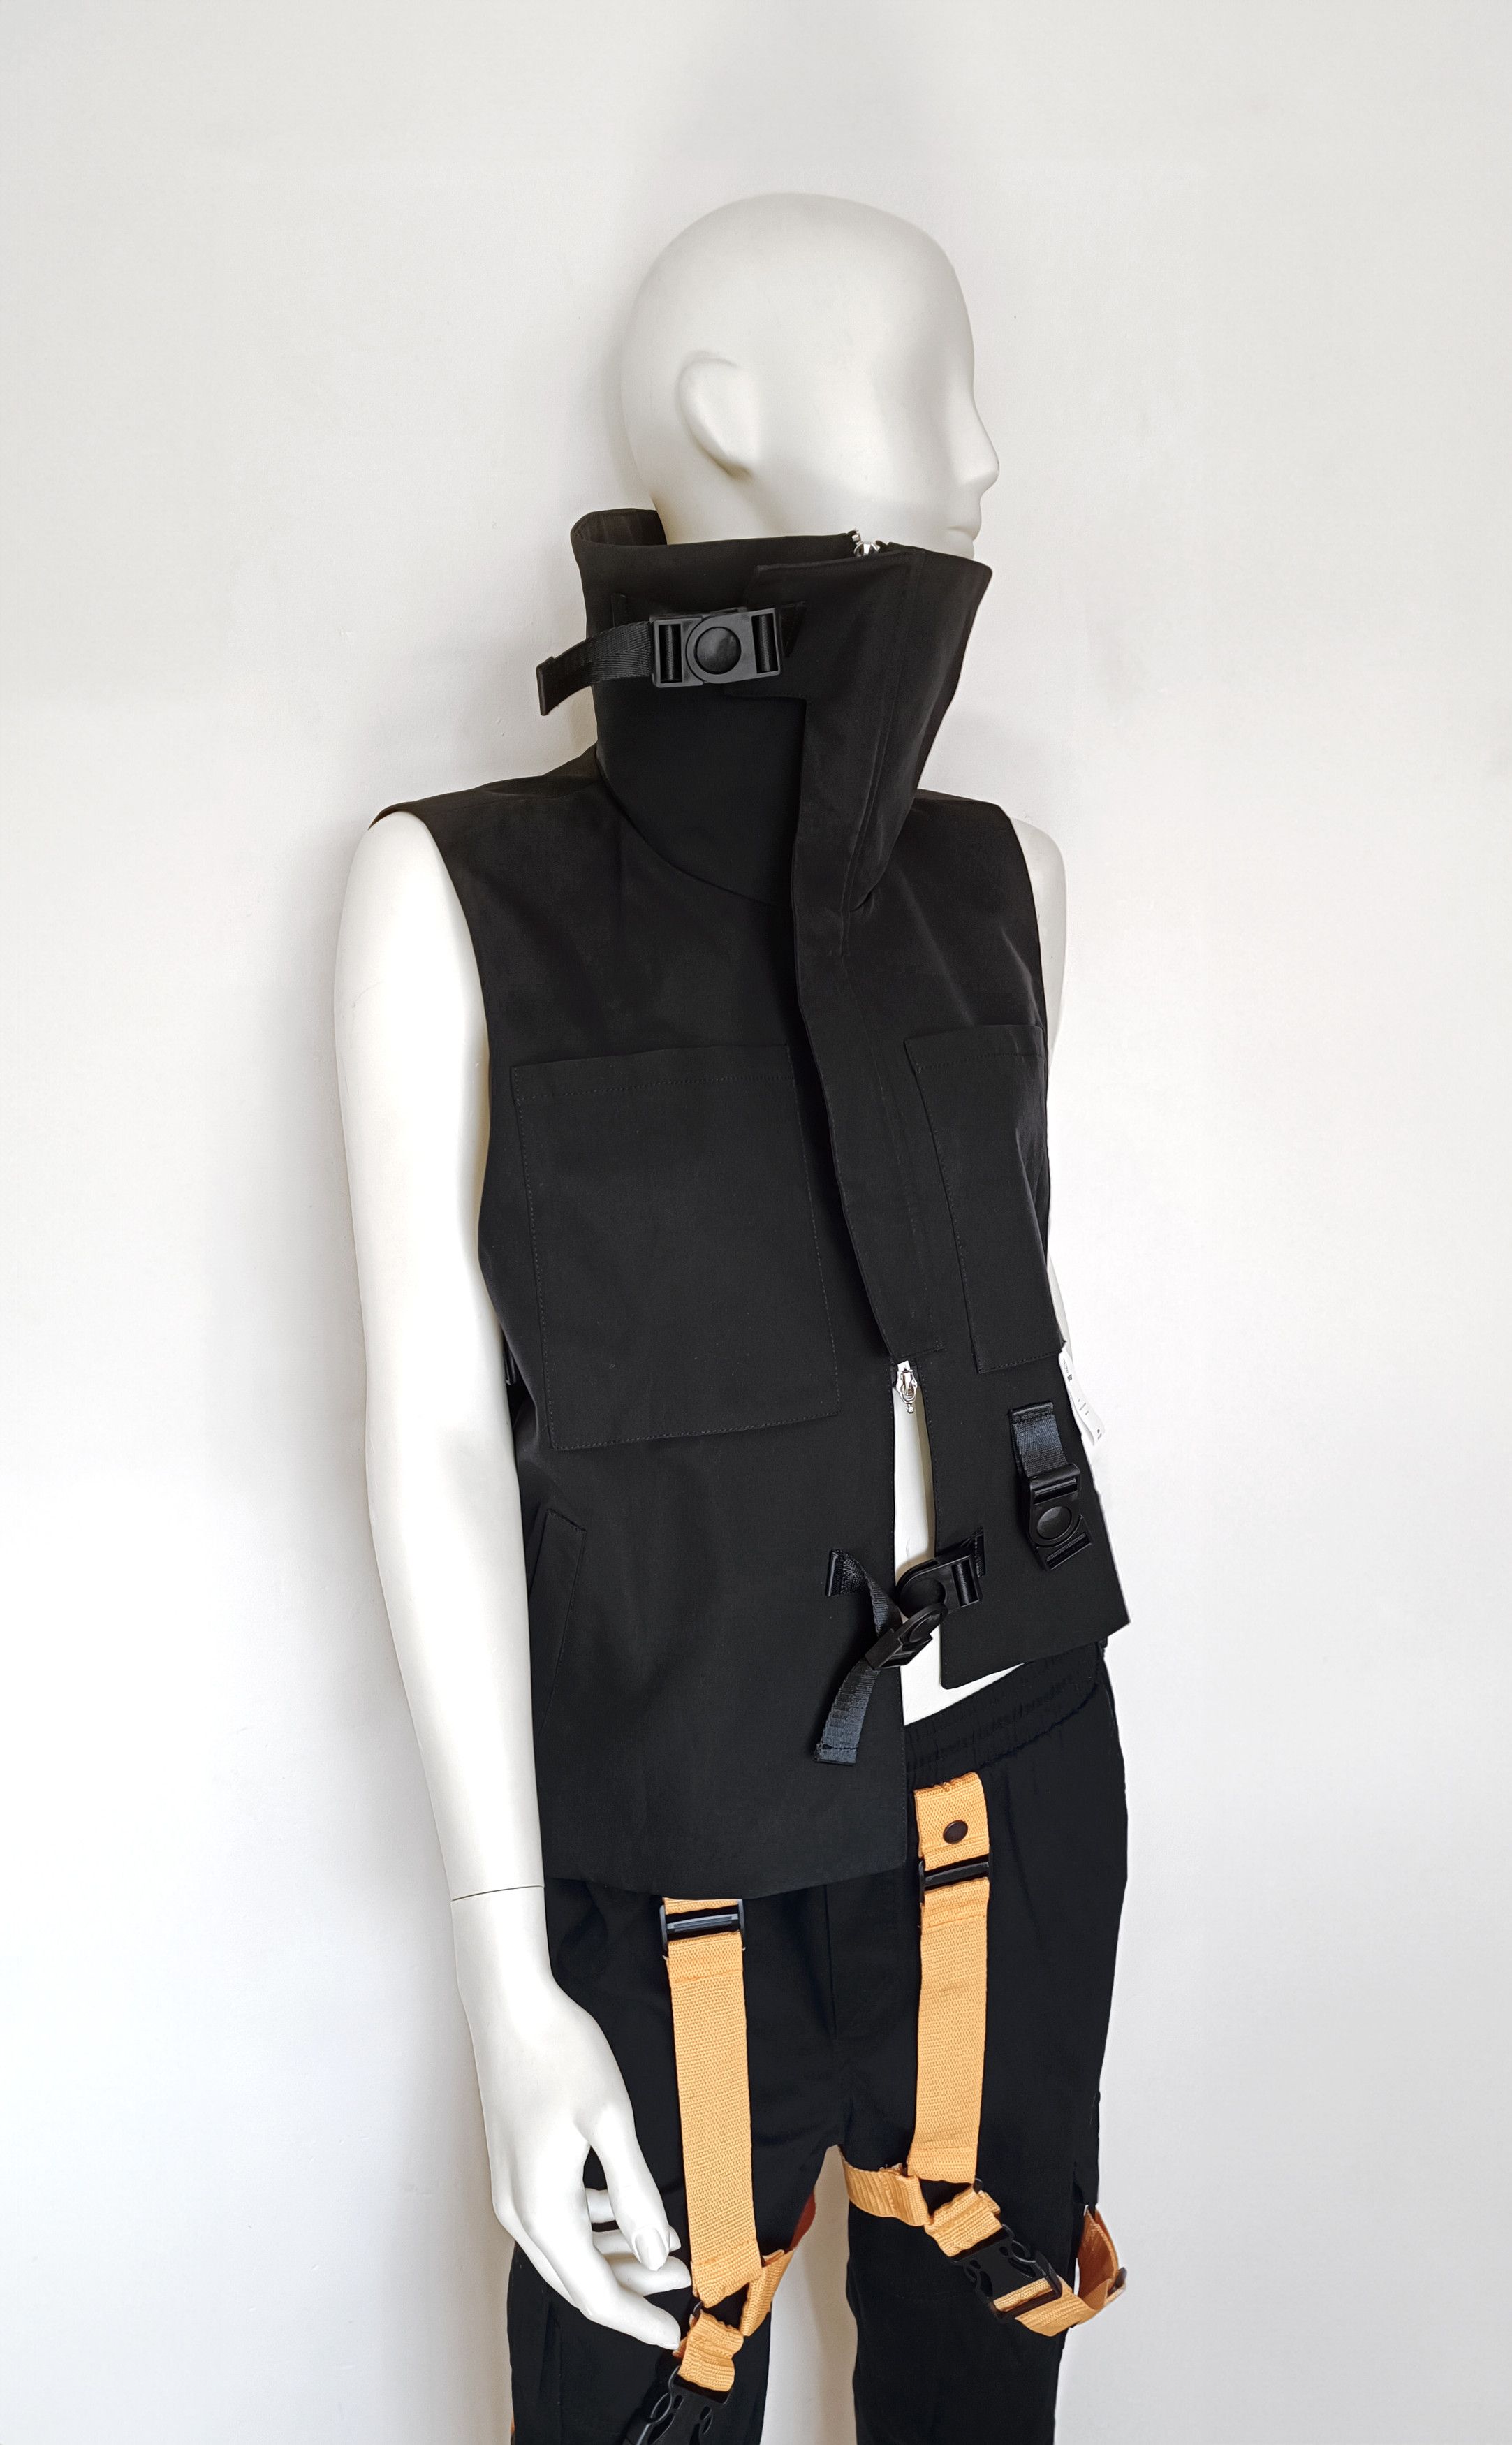 Avant Garde - Avant-Garde Adjustable Tactical Vest by ONSPEED - 15